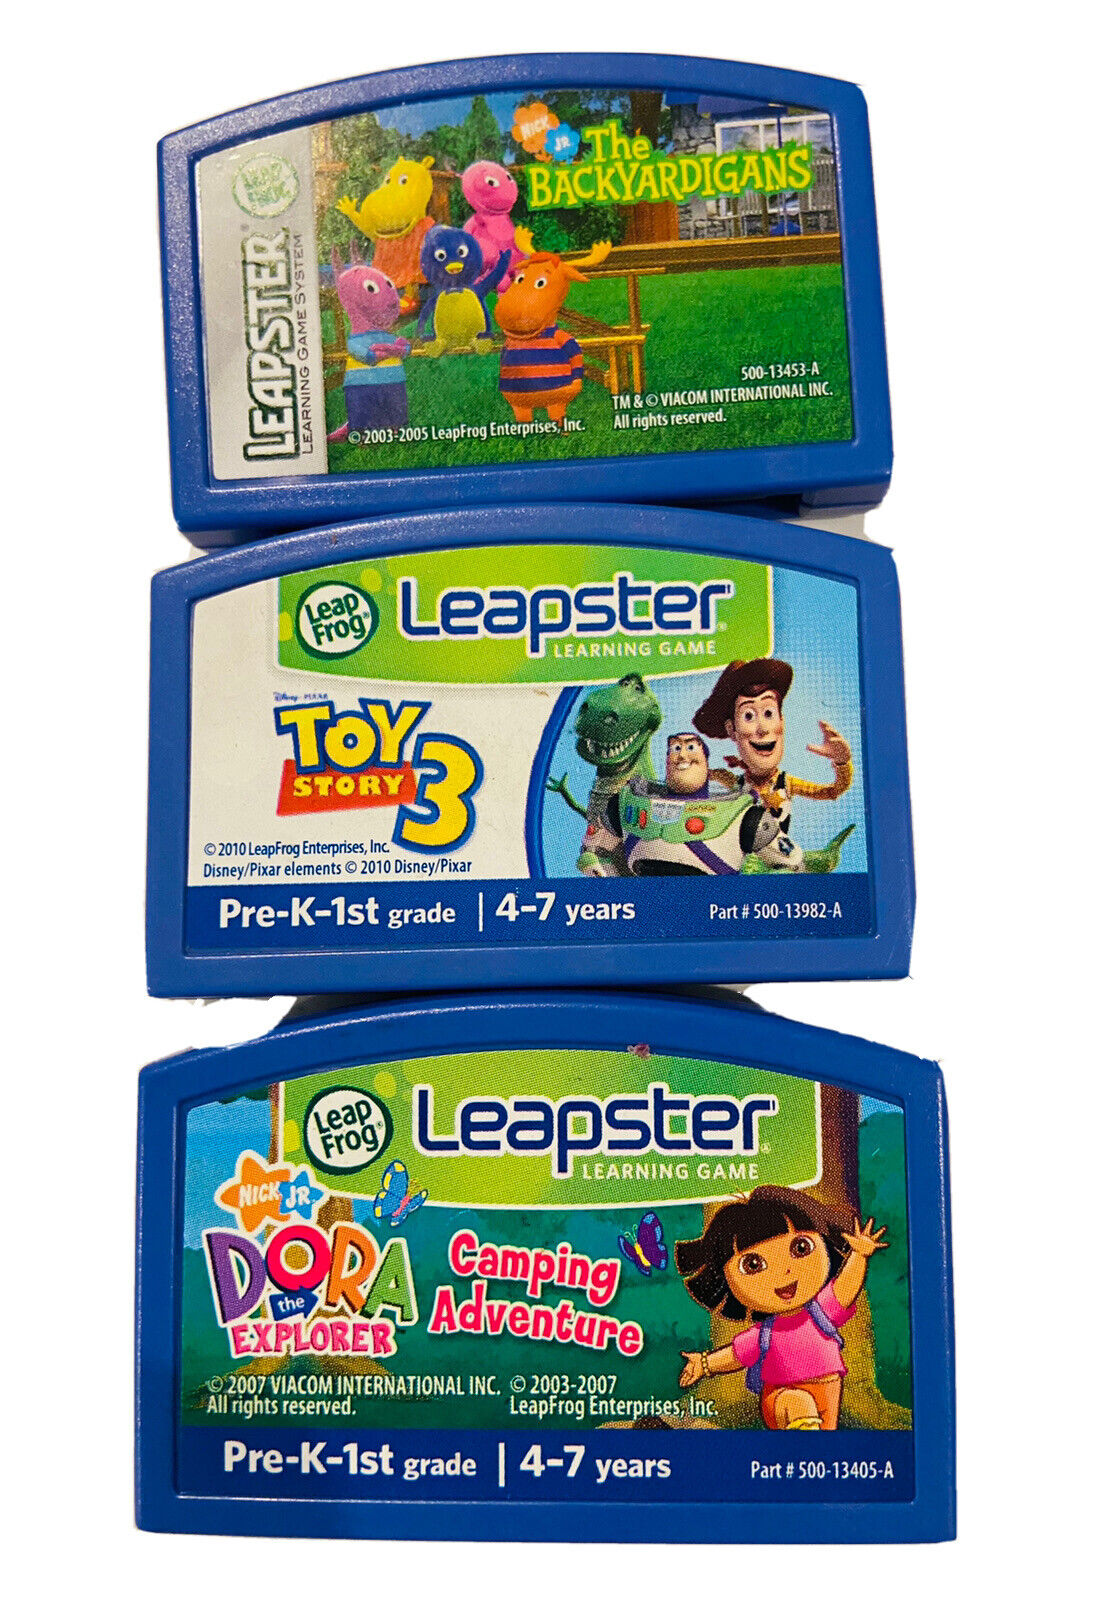 Lot of 3 Leap Frog Leapster Games Nick Dora Explorer Toy Story 3 Backyardigans LeapFrog